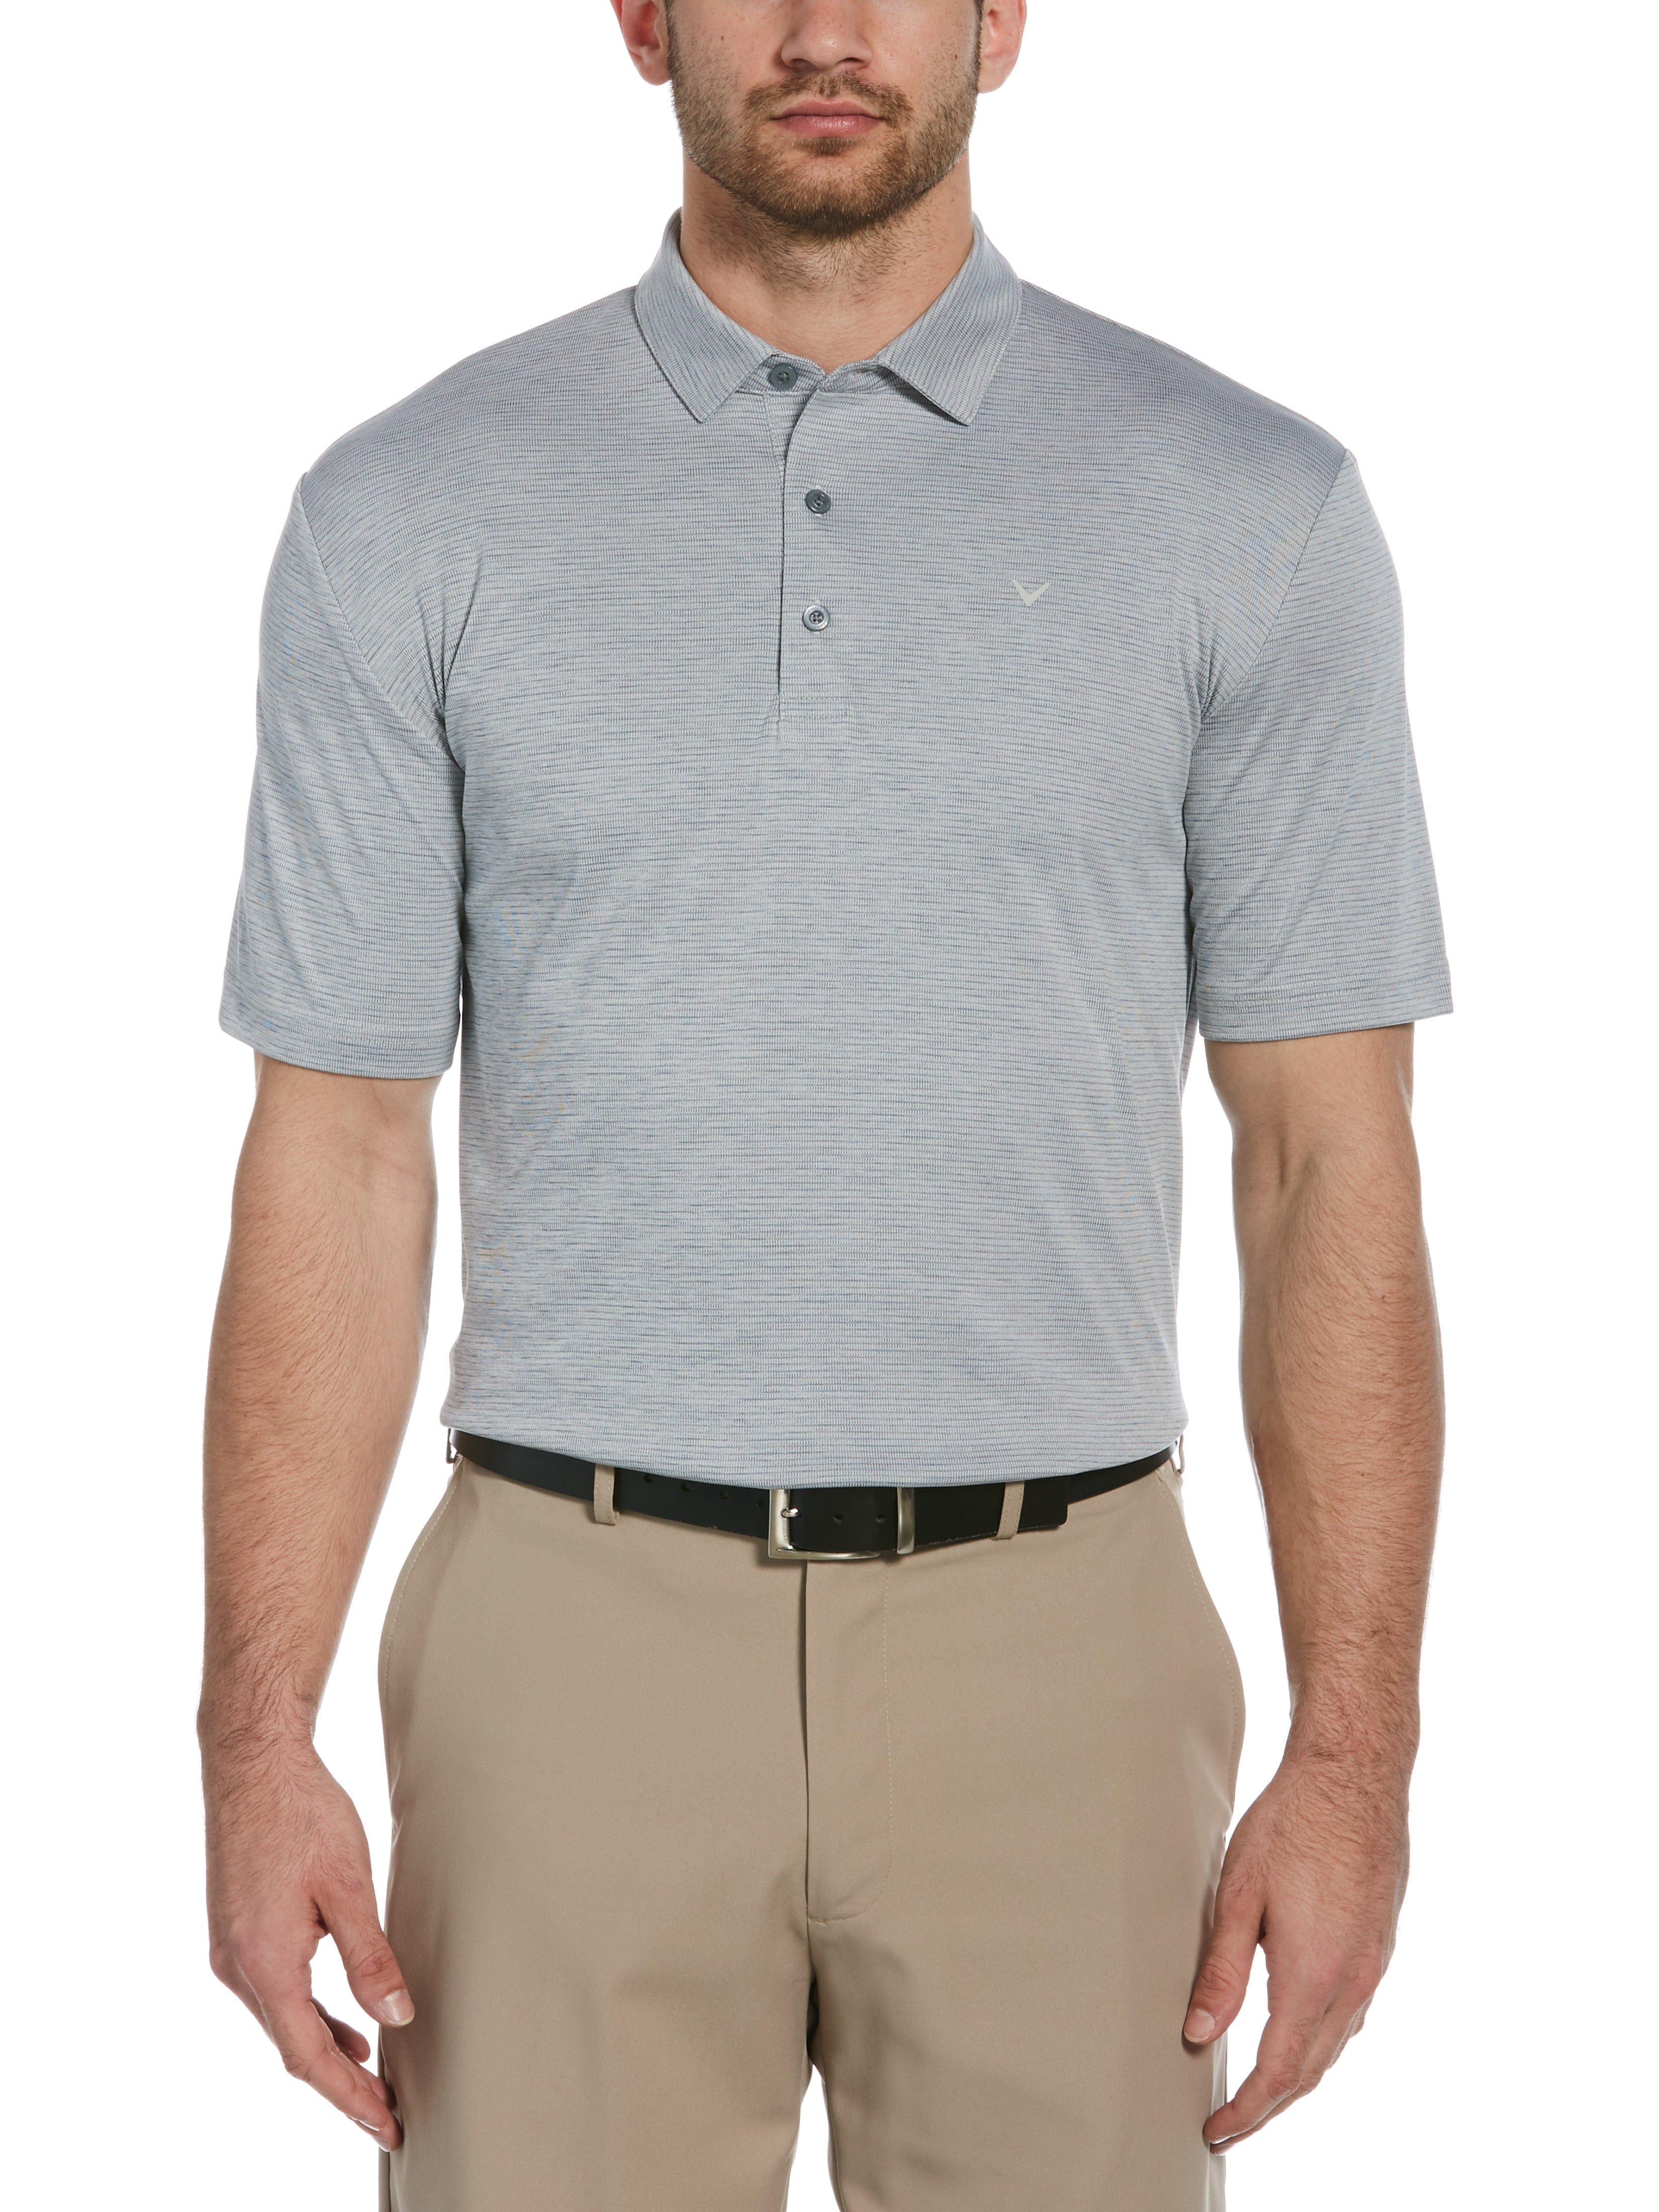 Callaway Apparel Mens Solid Texture Golf Polo Shirt, Size XL, Tradewinds Heather Gray, 100% Polyester | Golf Apparel Shop